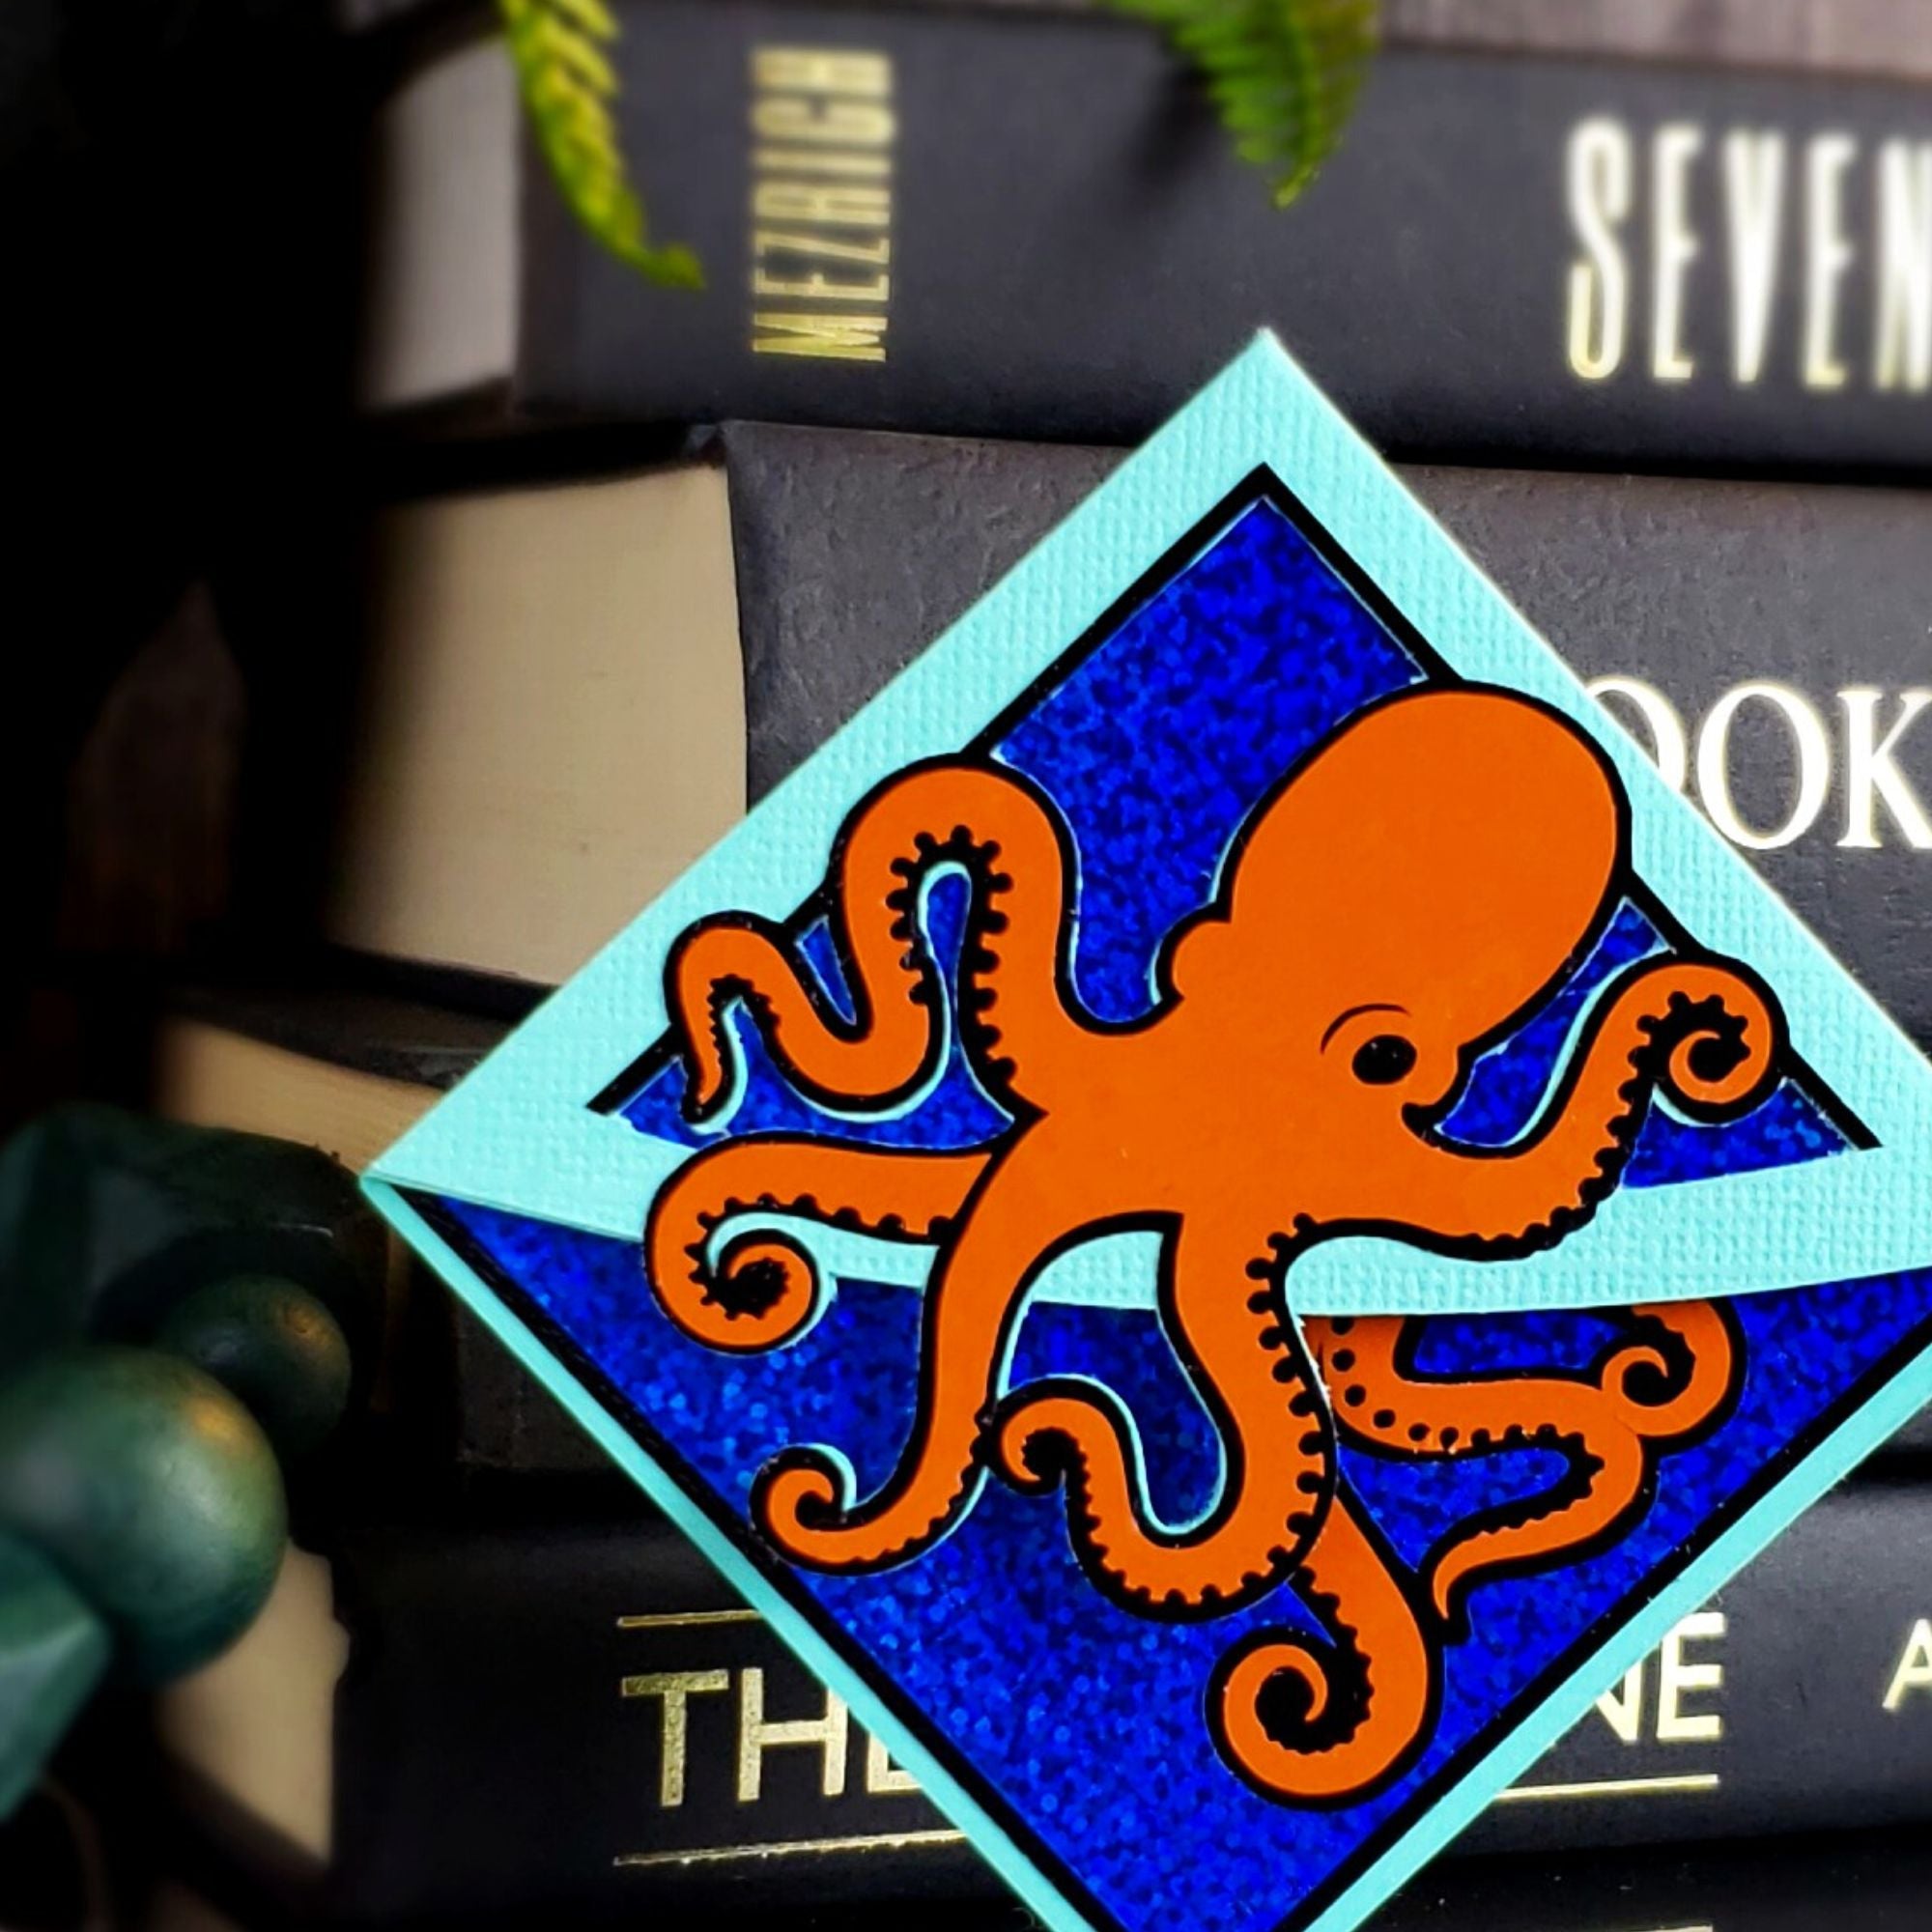 Octopus Paper Corner Bookmark